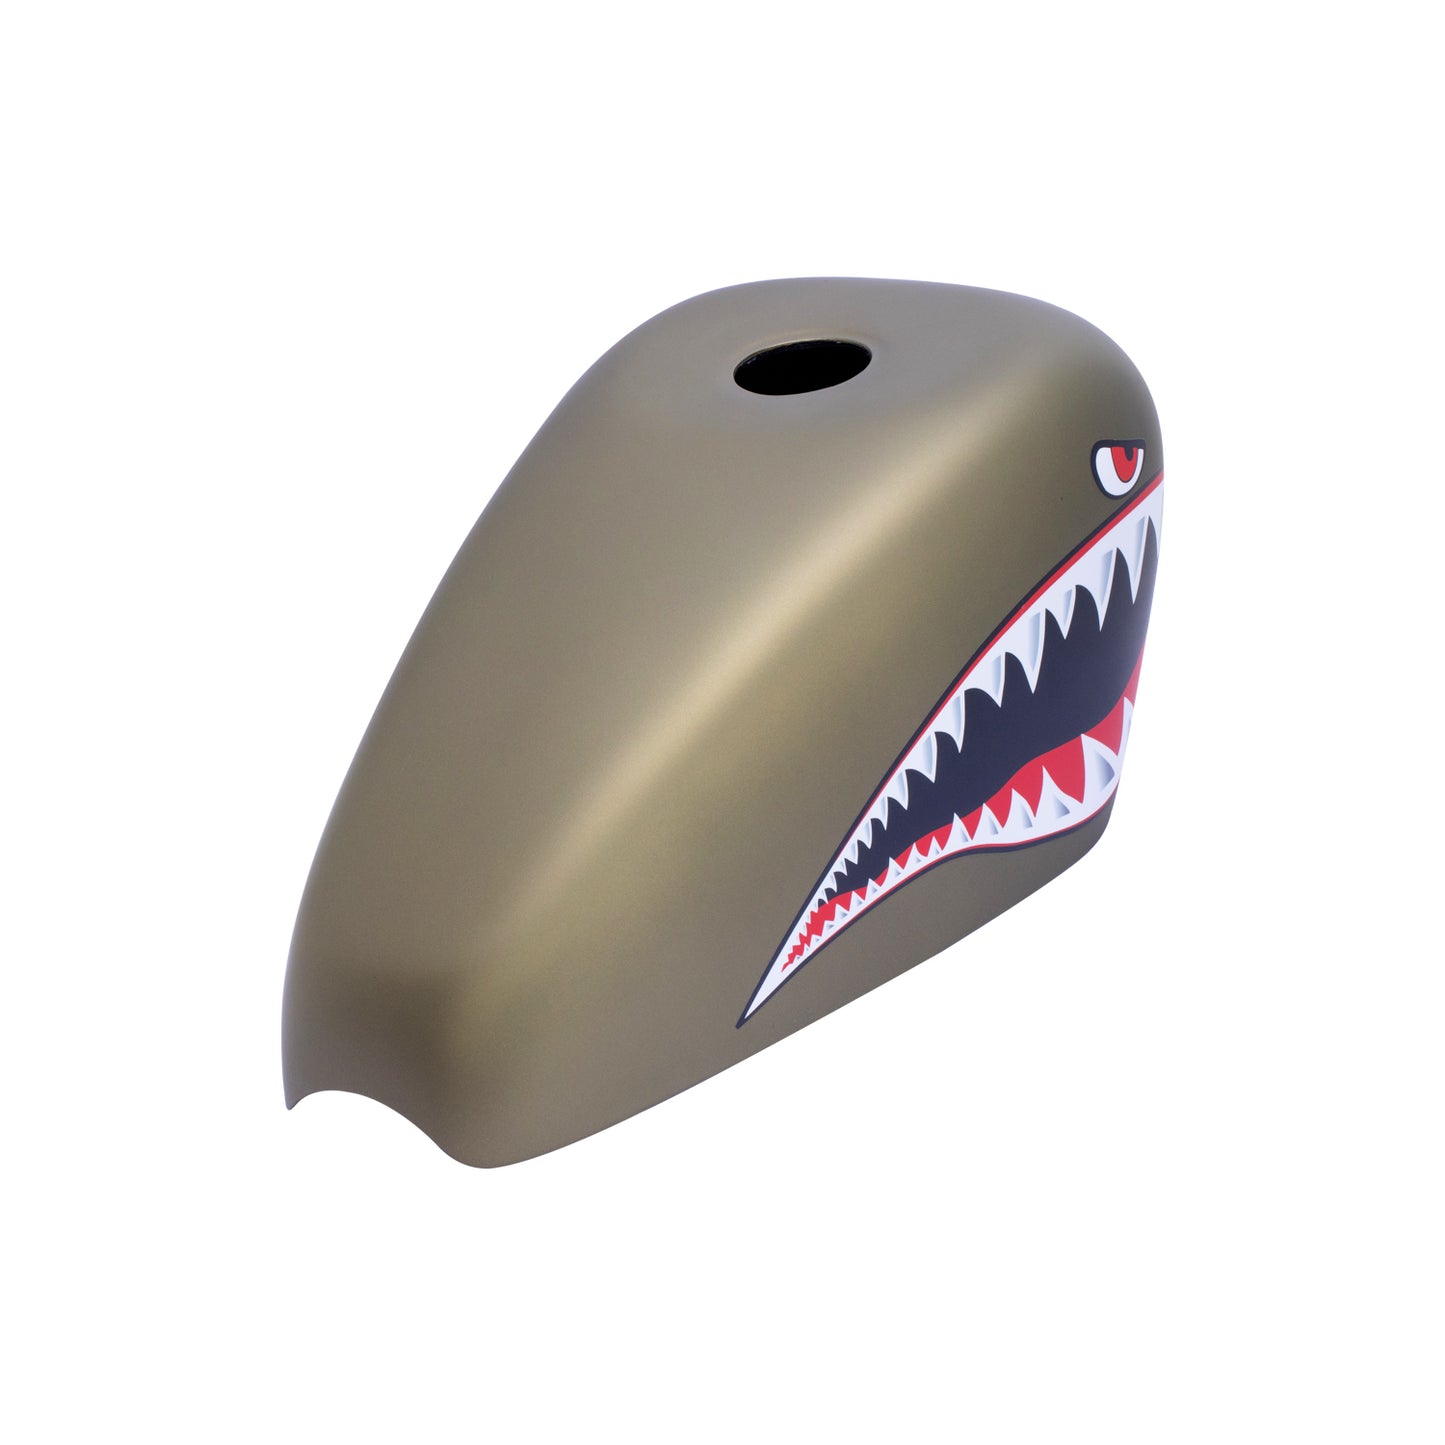 Green Oliver shark mouth